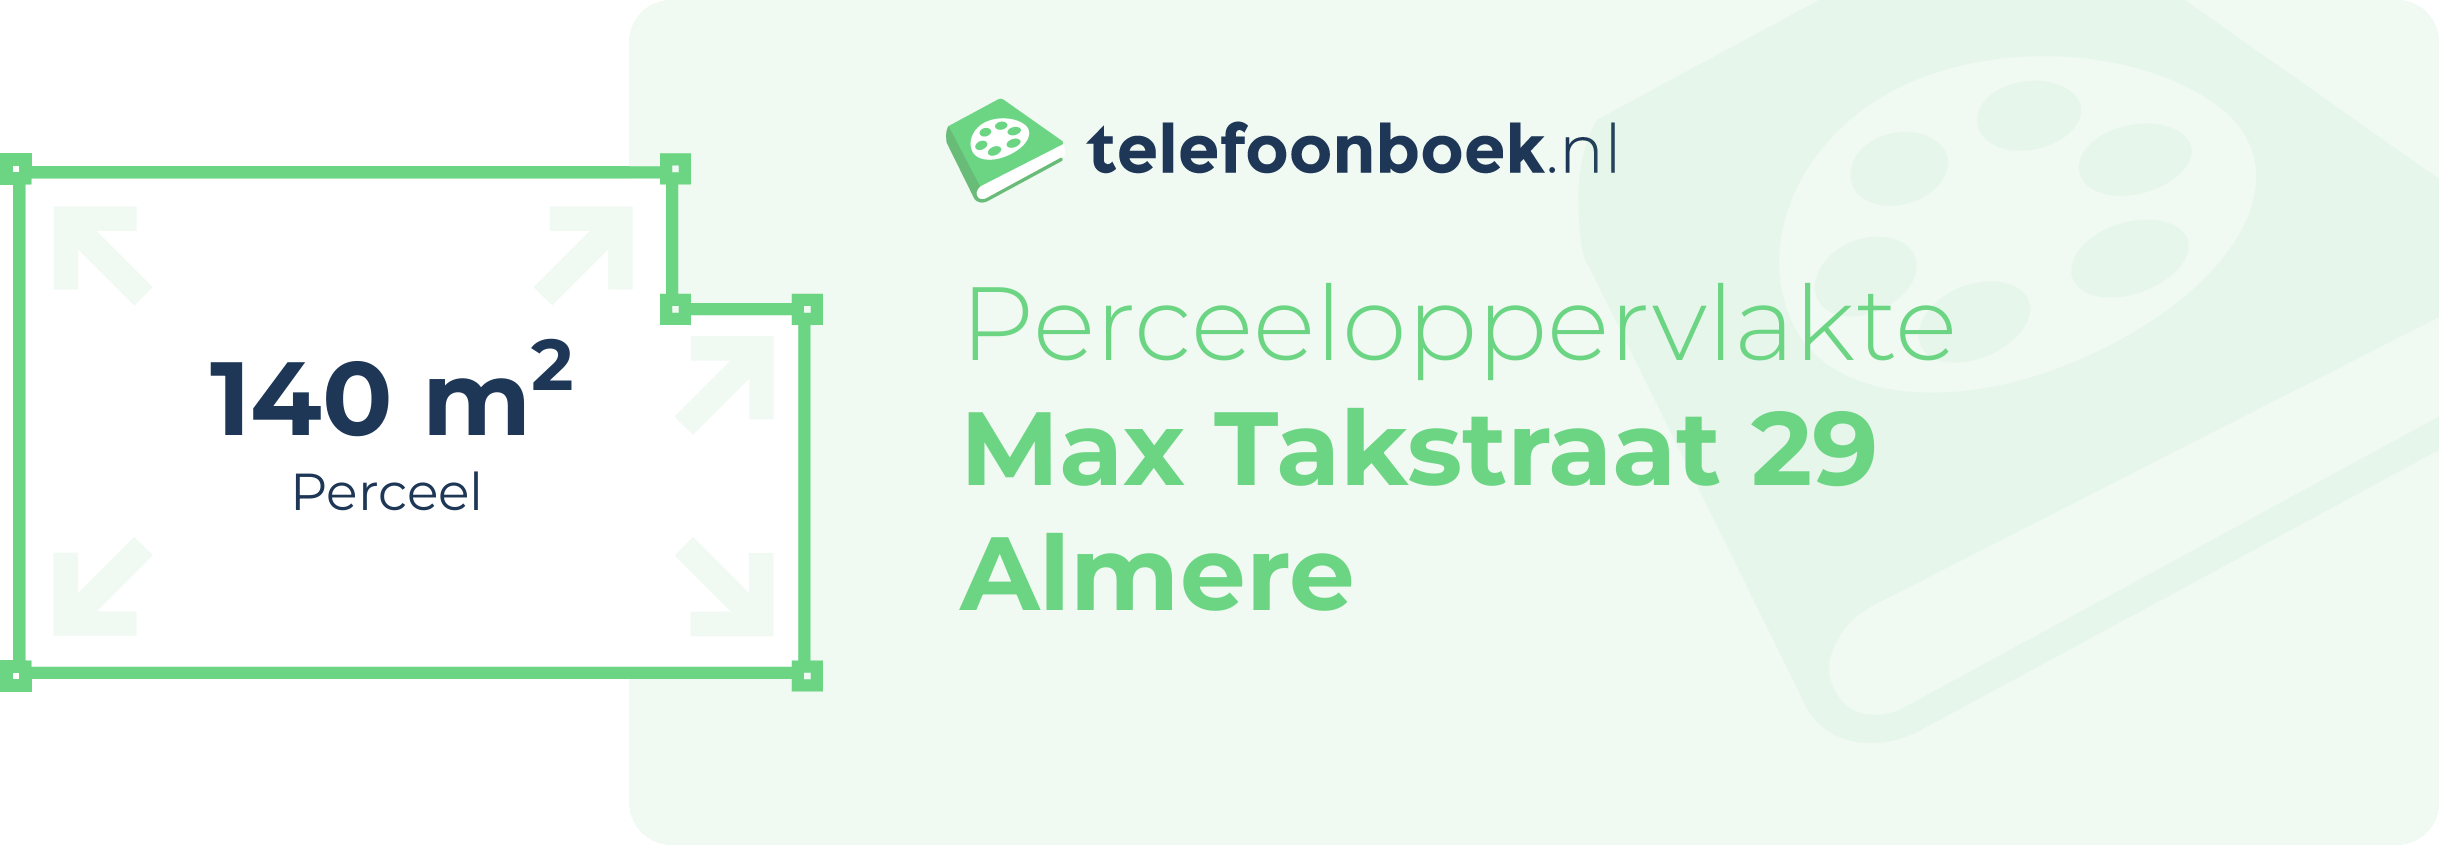 Perceeloppervlakte Max Takstraat 29 Almere